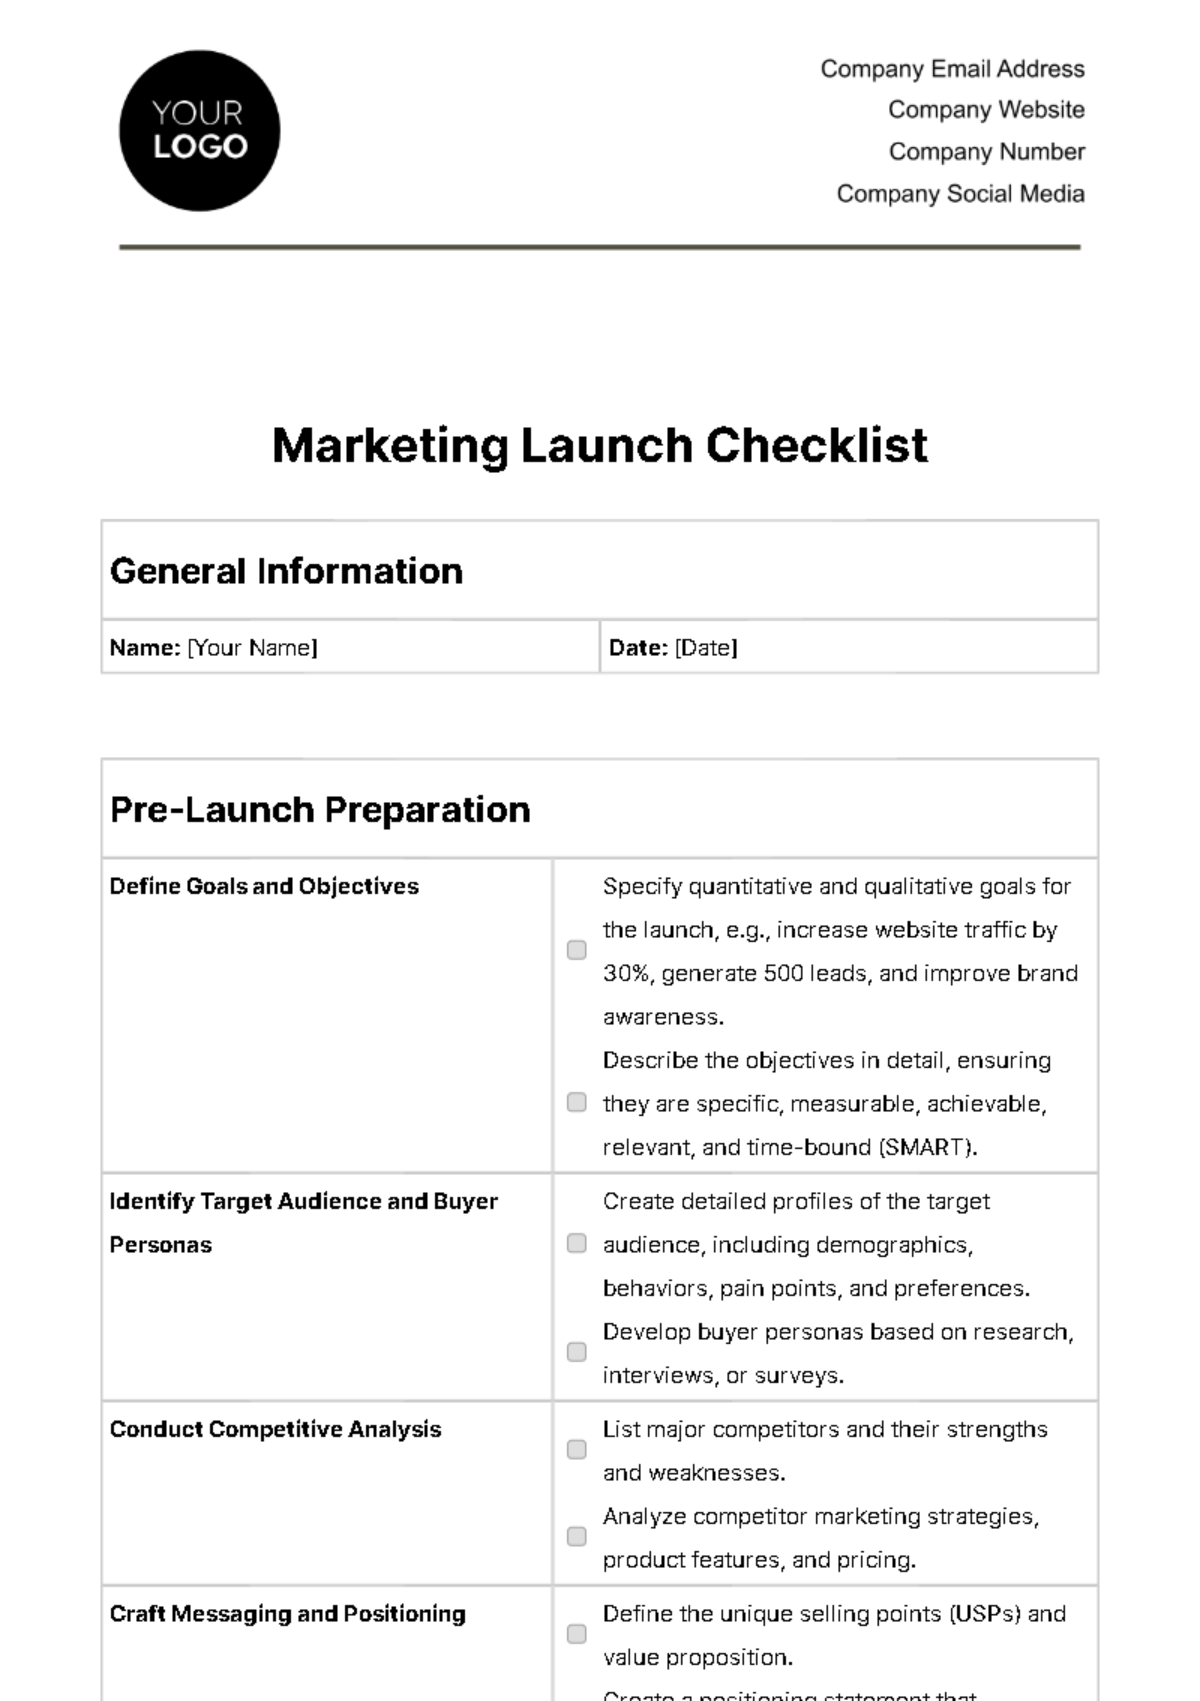 Free Marketing Launch Checklist Template